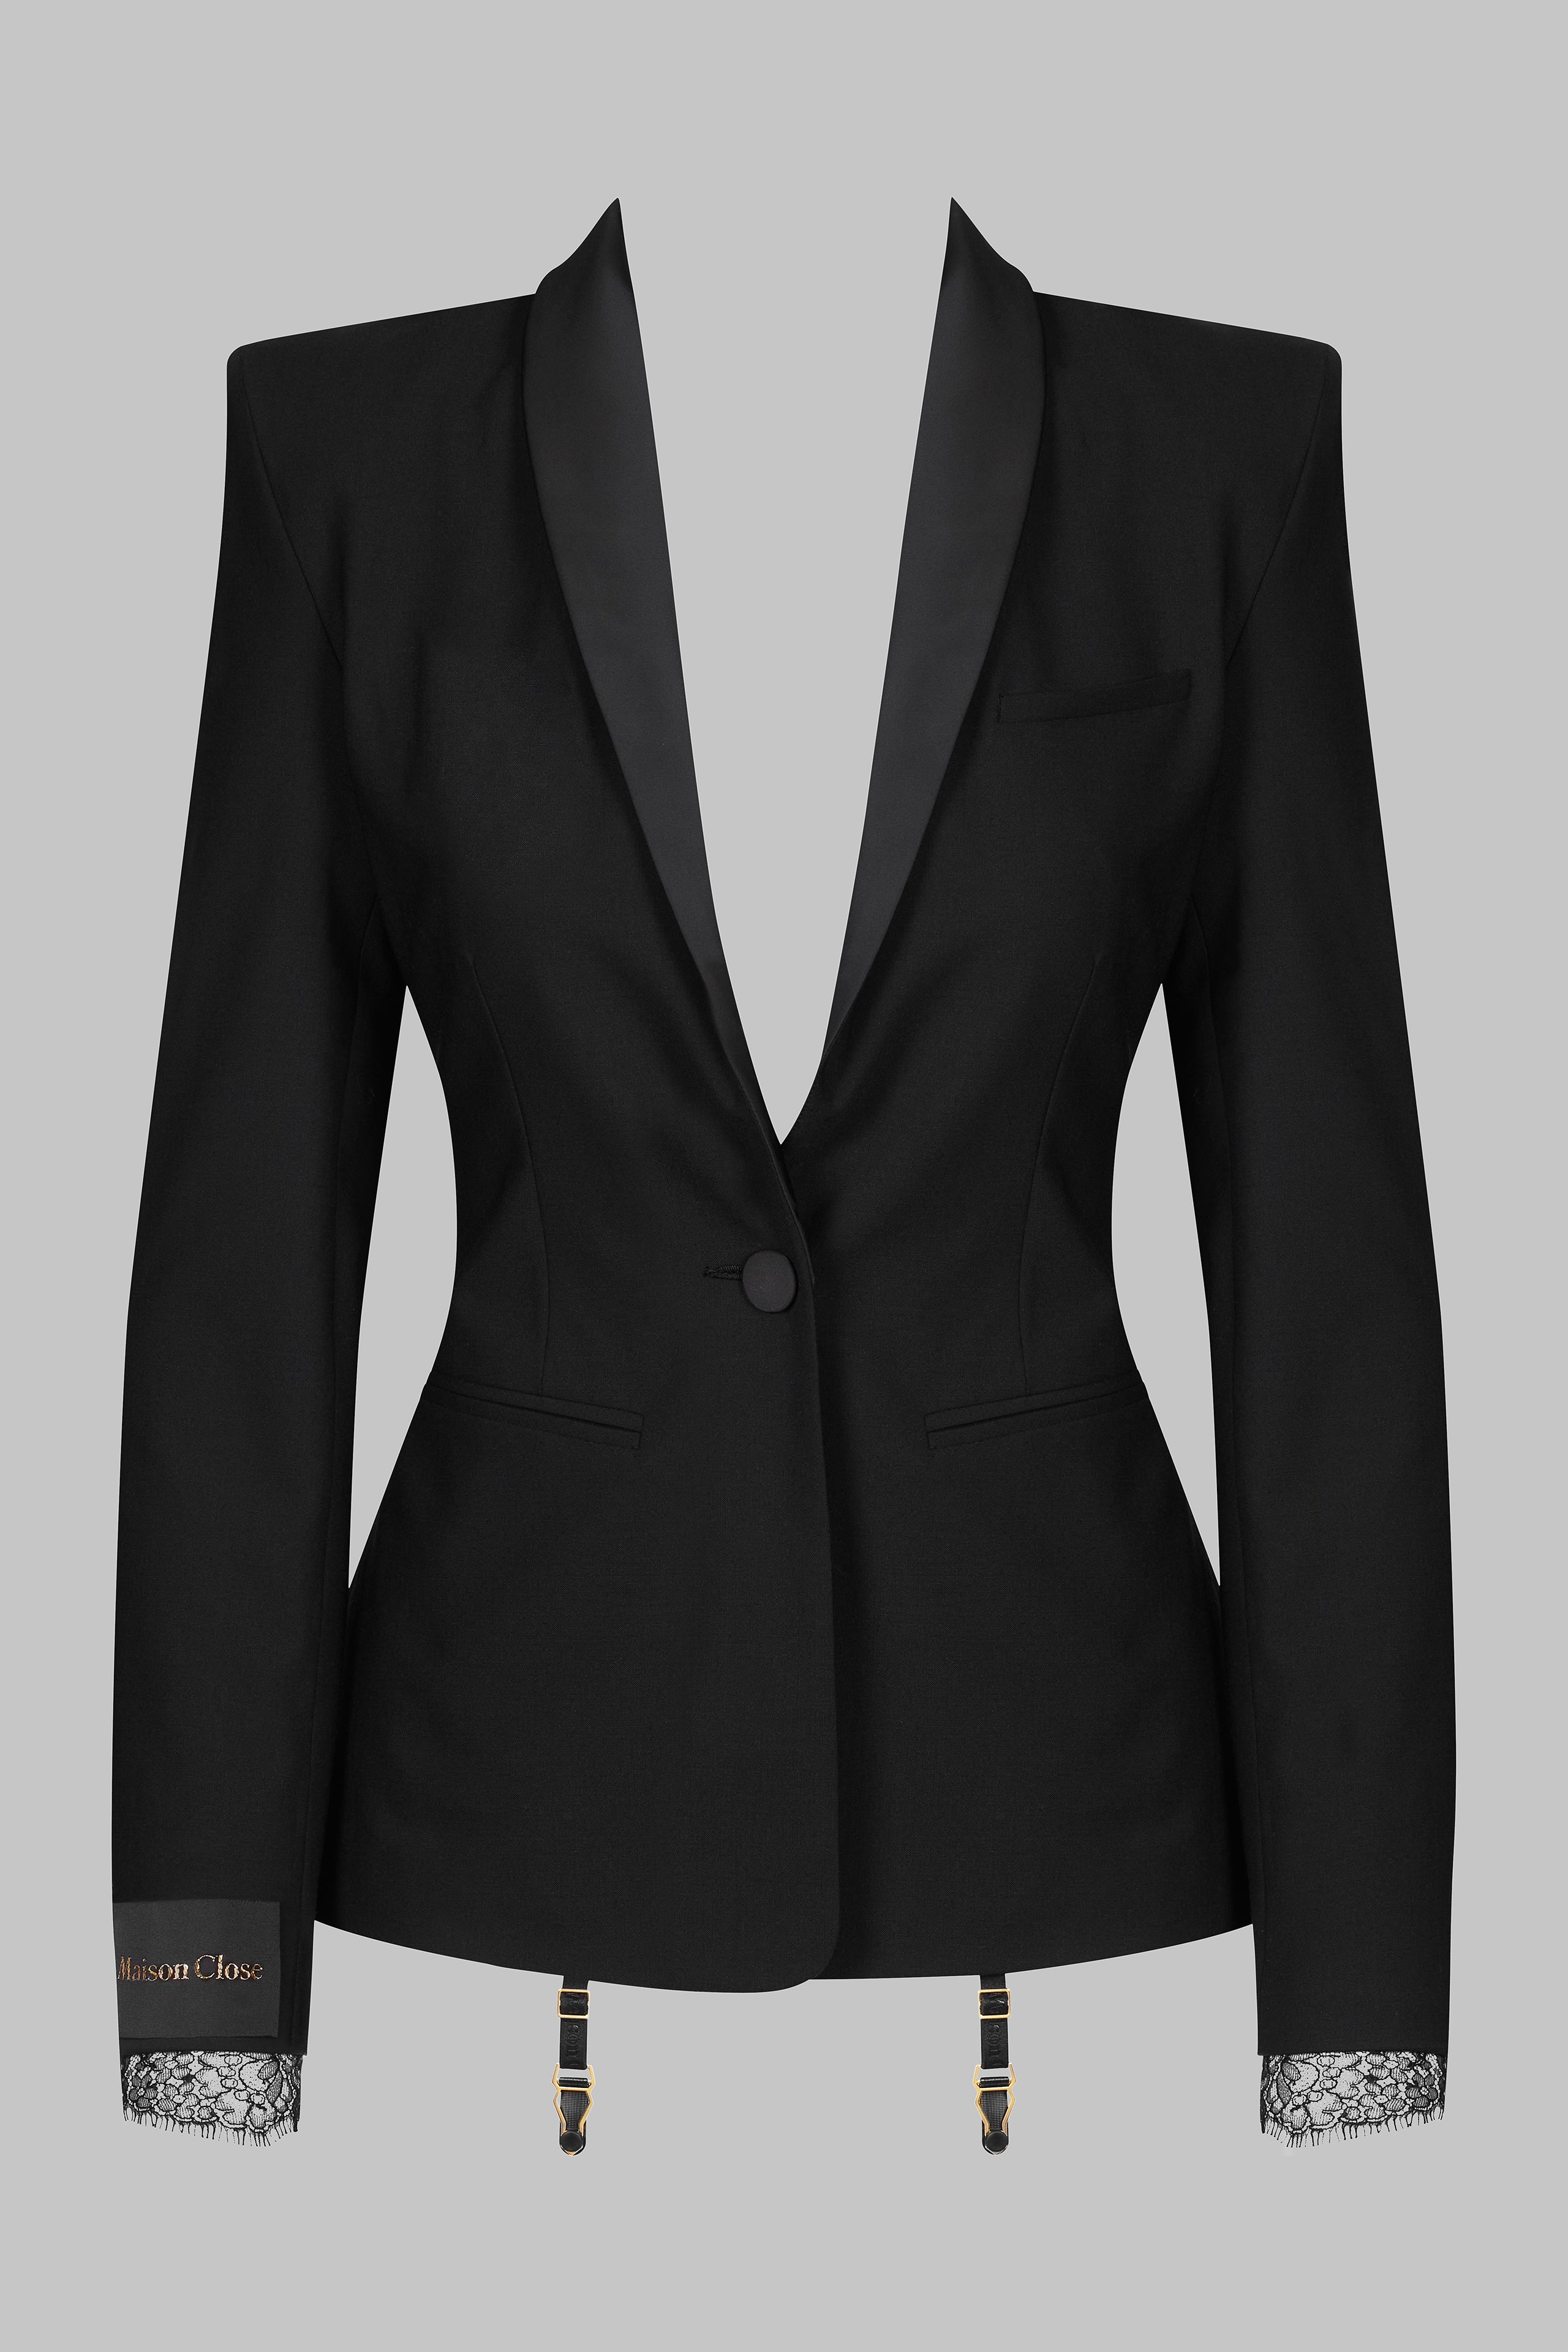 001 - Wool tuxedo jacket